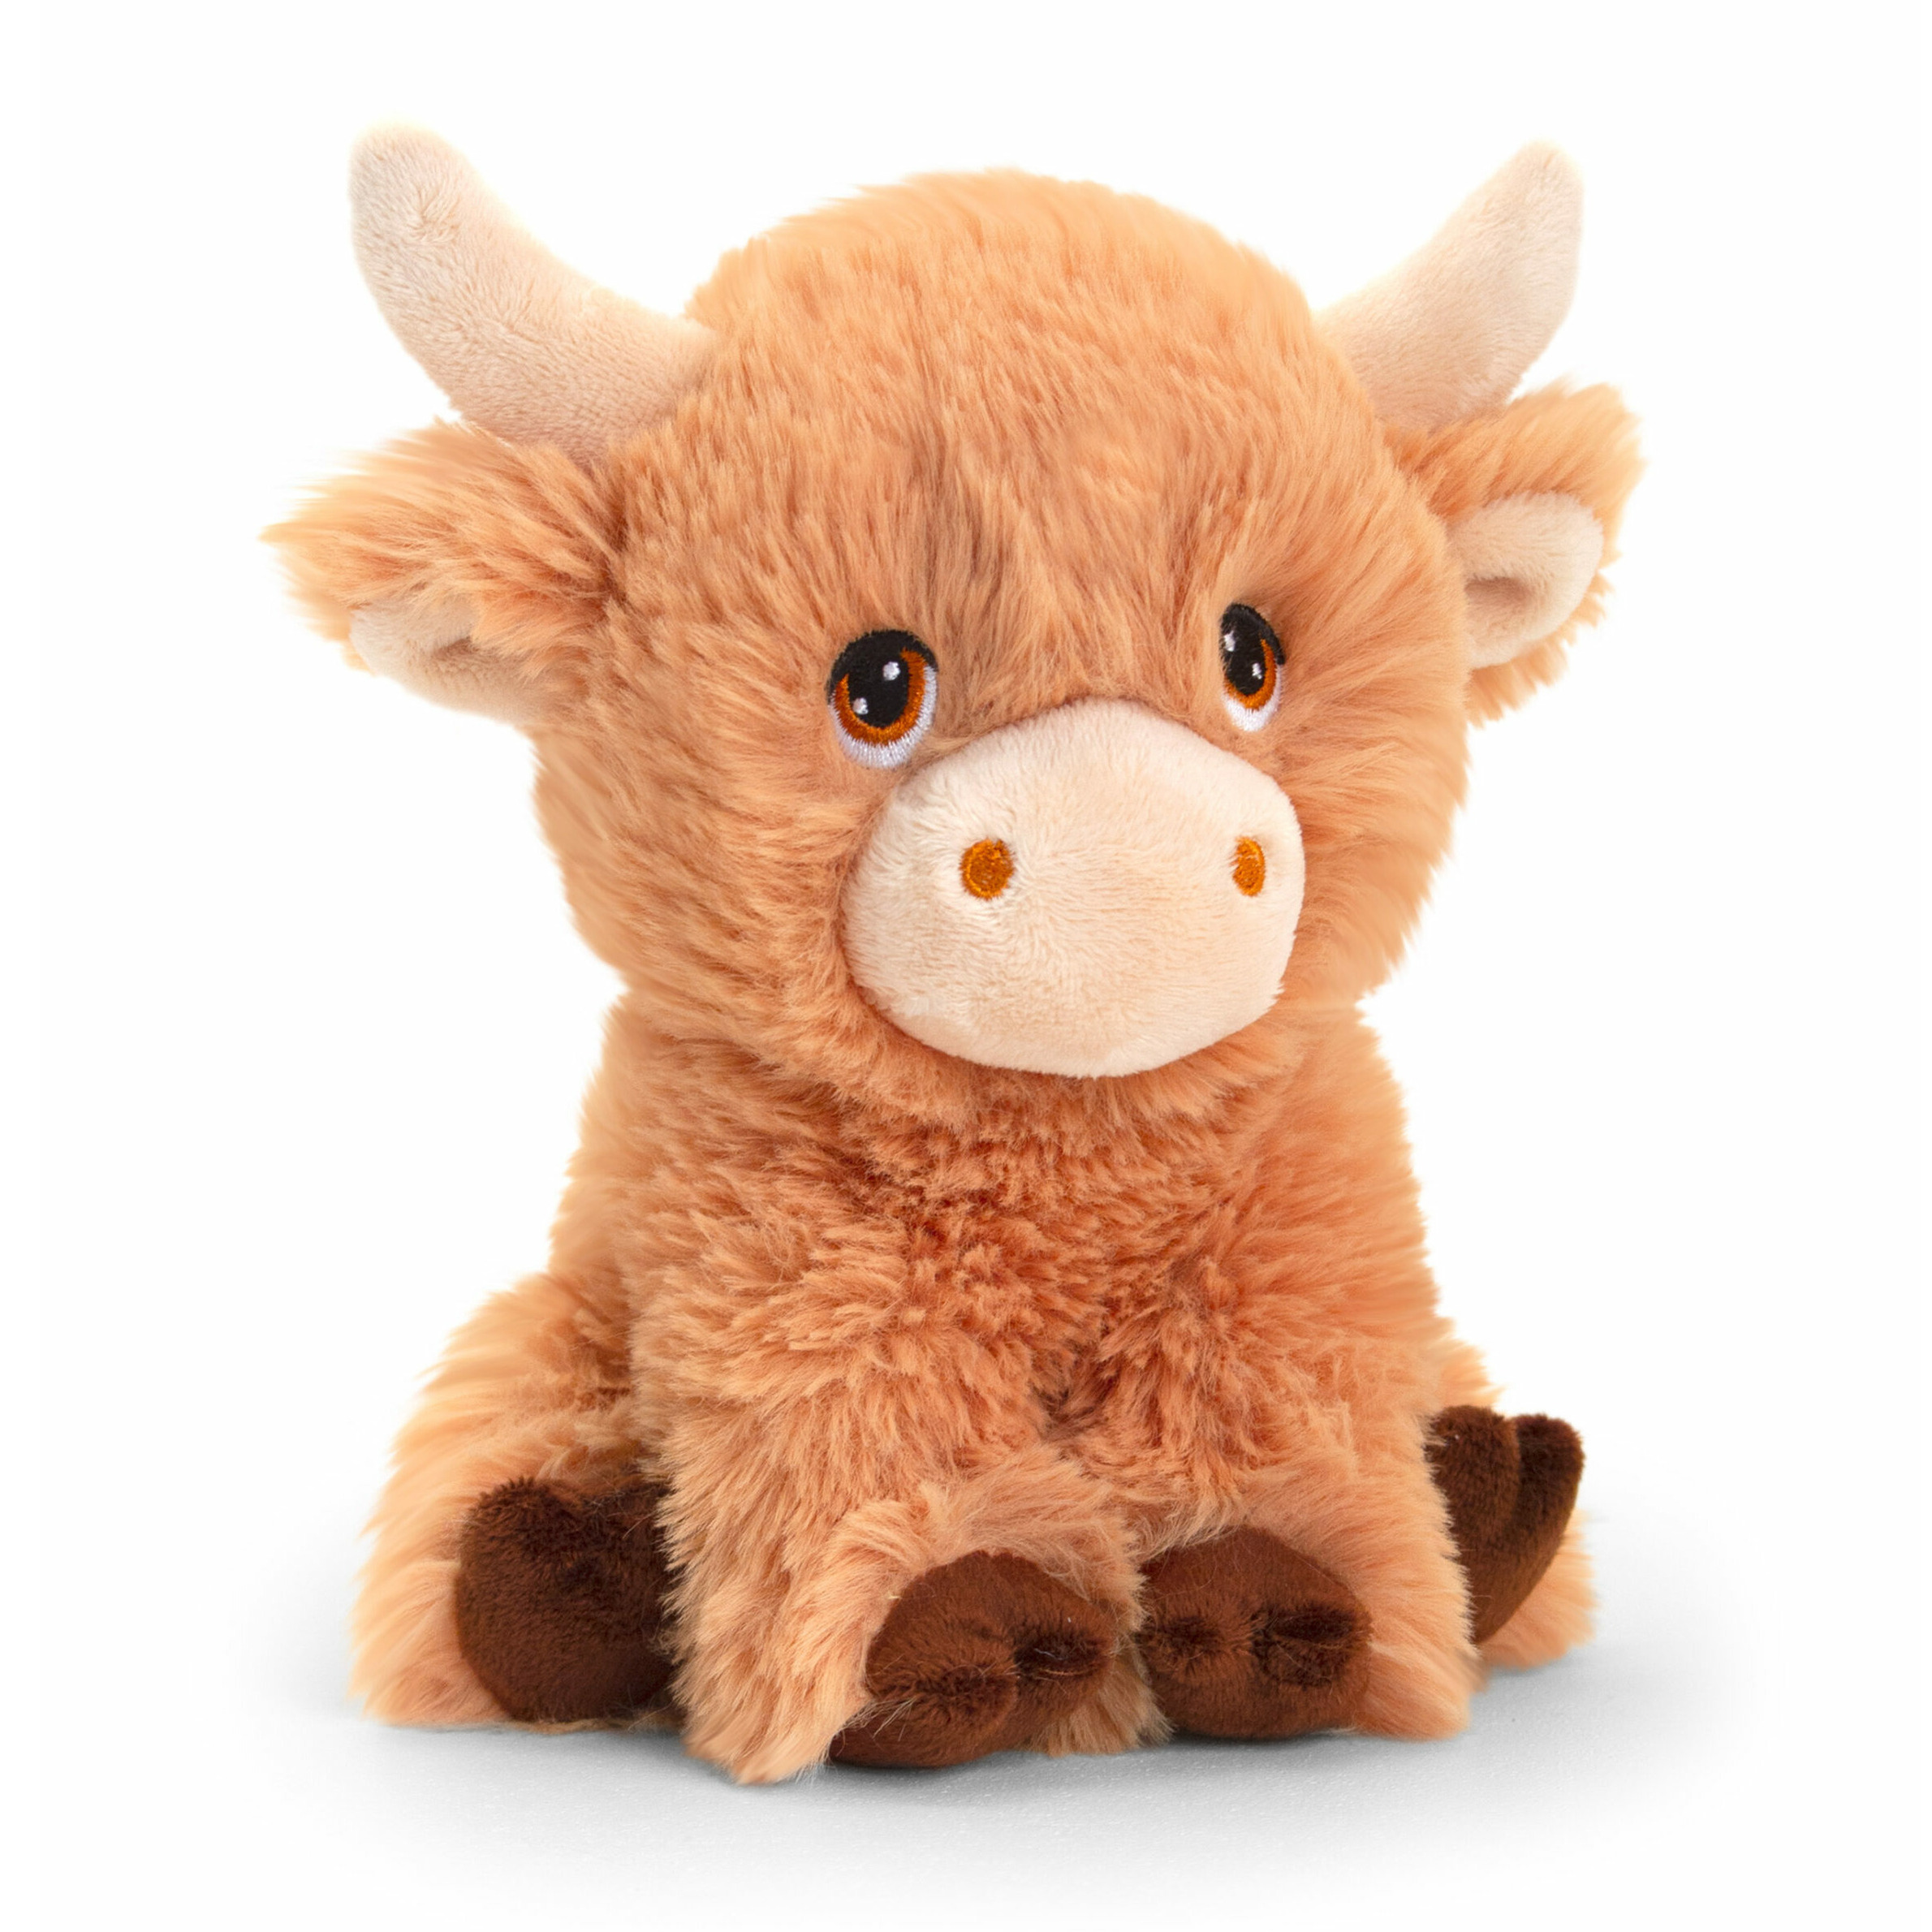 Keel Toys pluche koe met hoorns knuffeldier - bruin - zittend - 18 cm